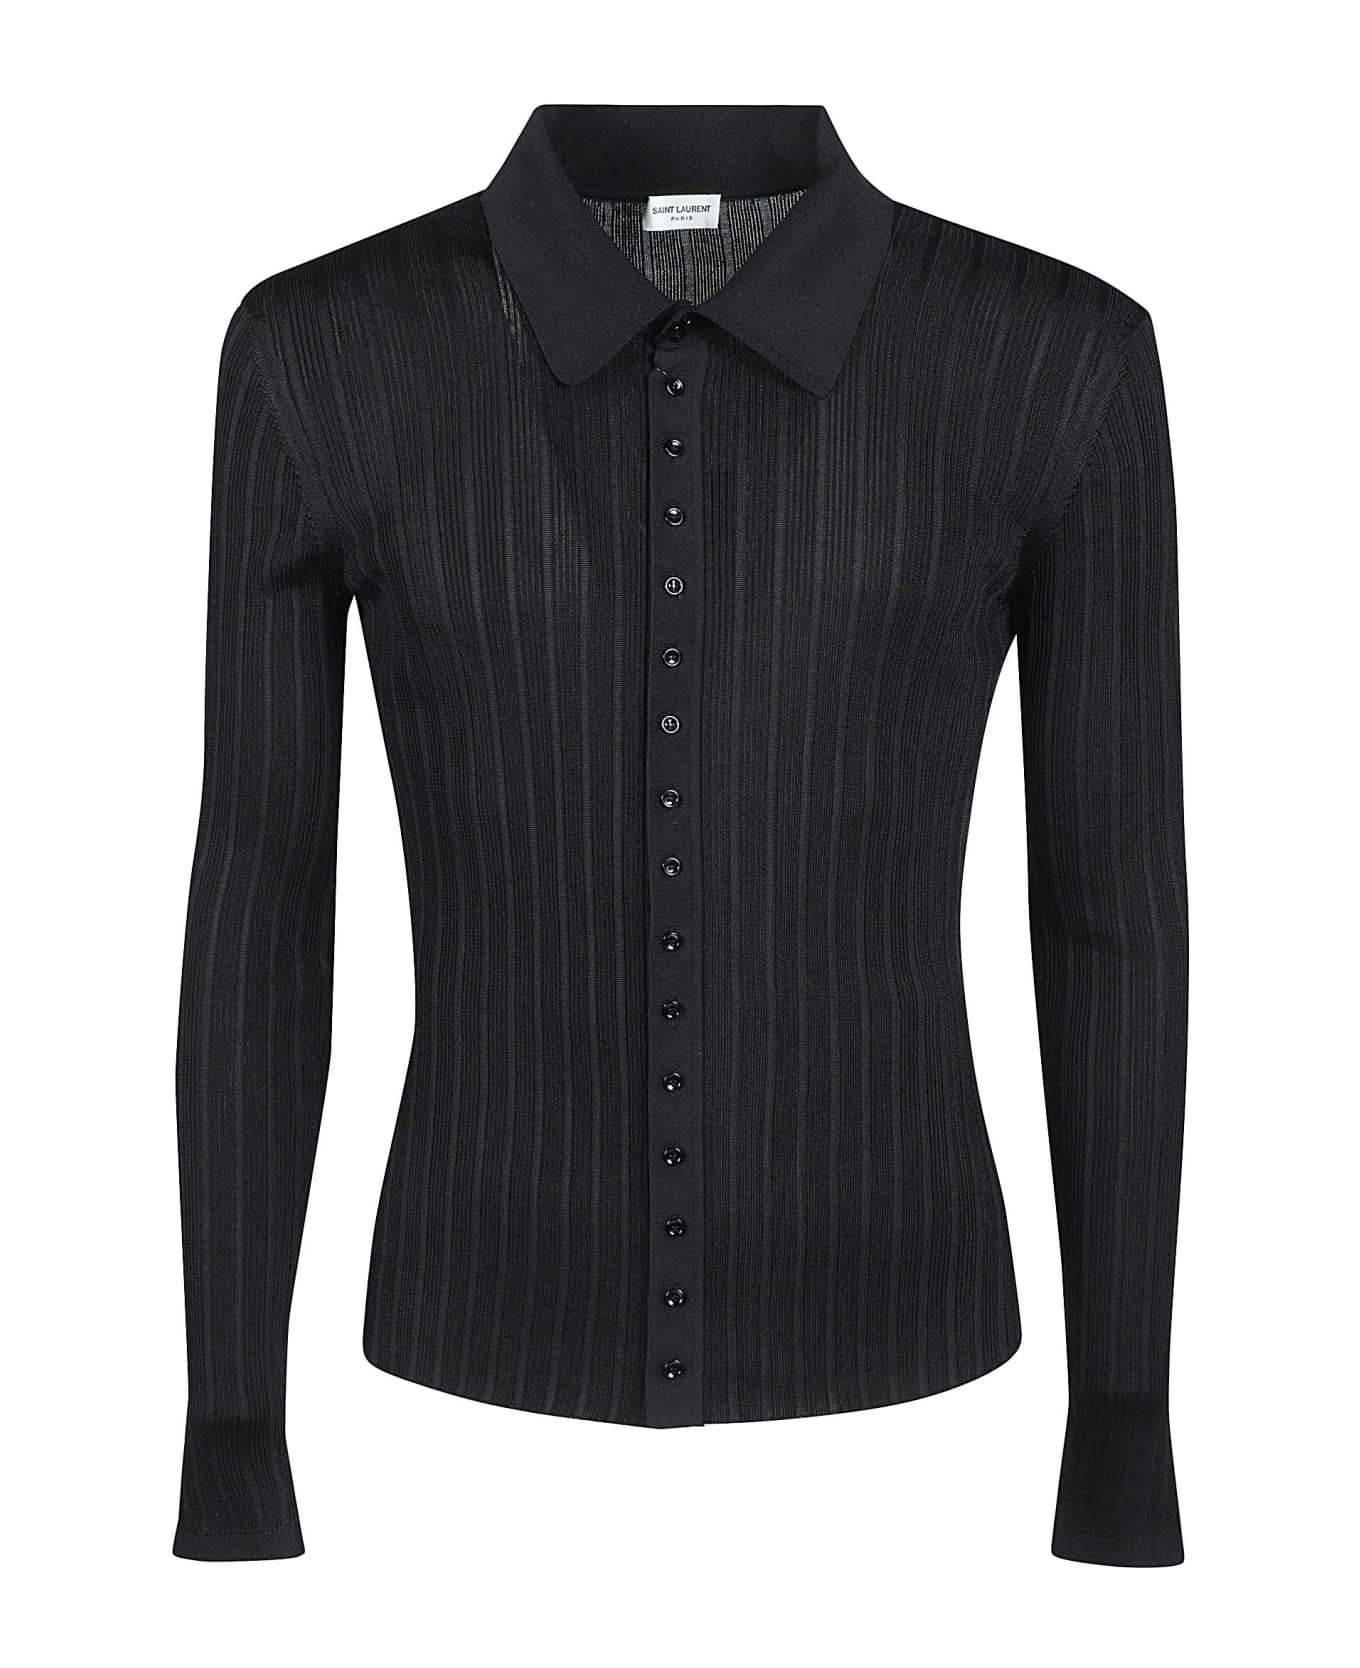 Saint Laurent Ribbed Shirt - Black